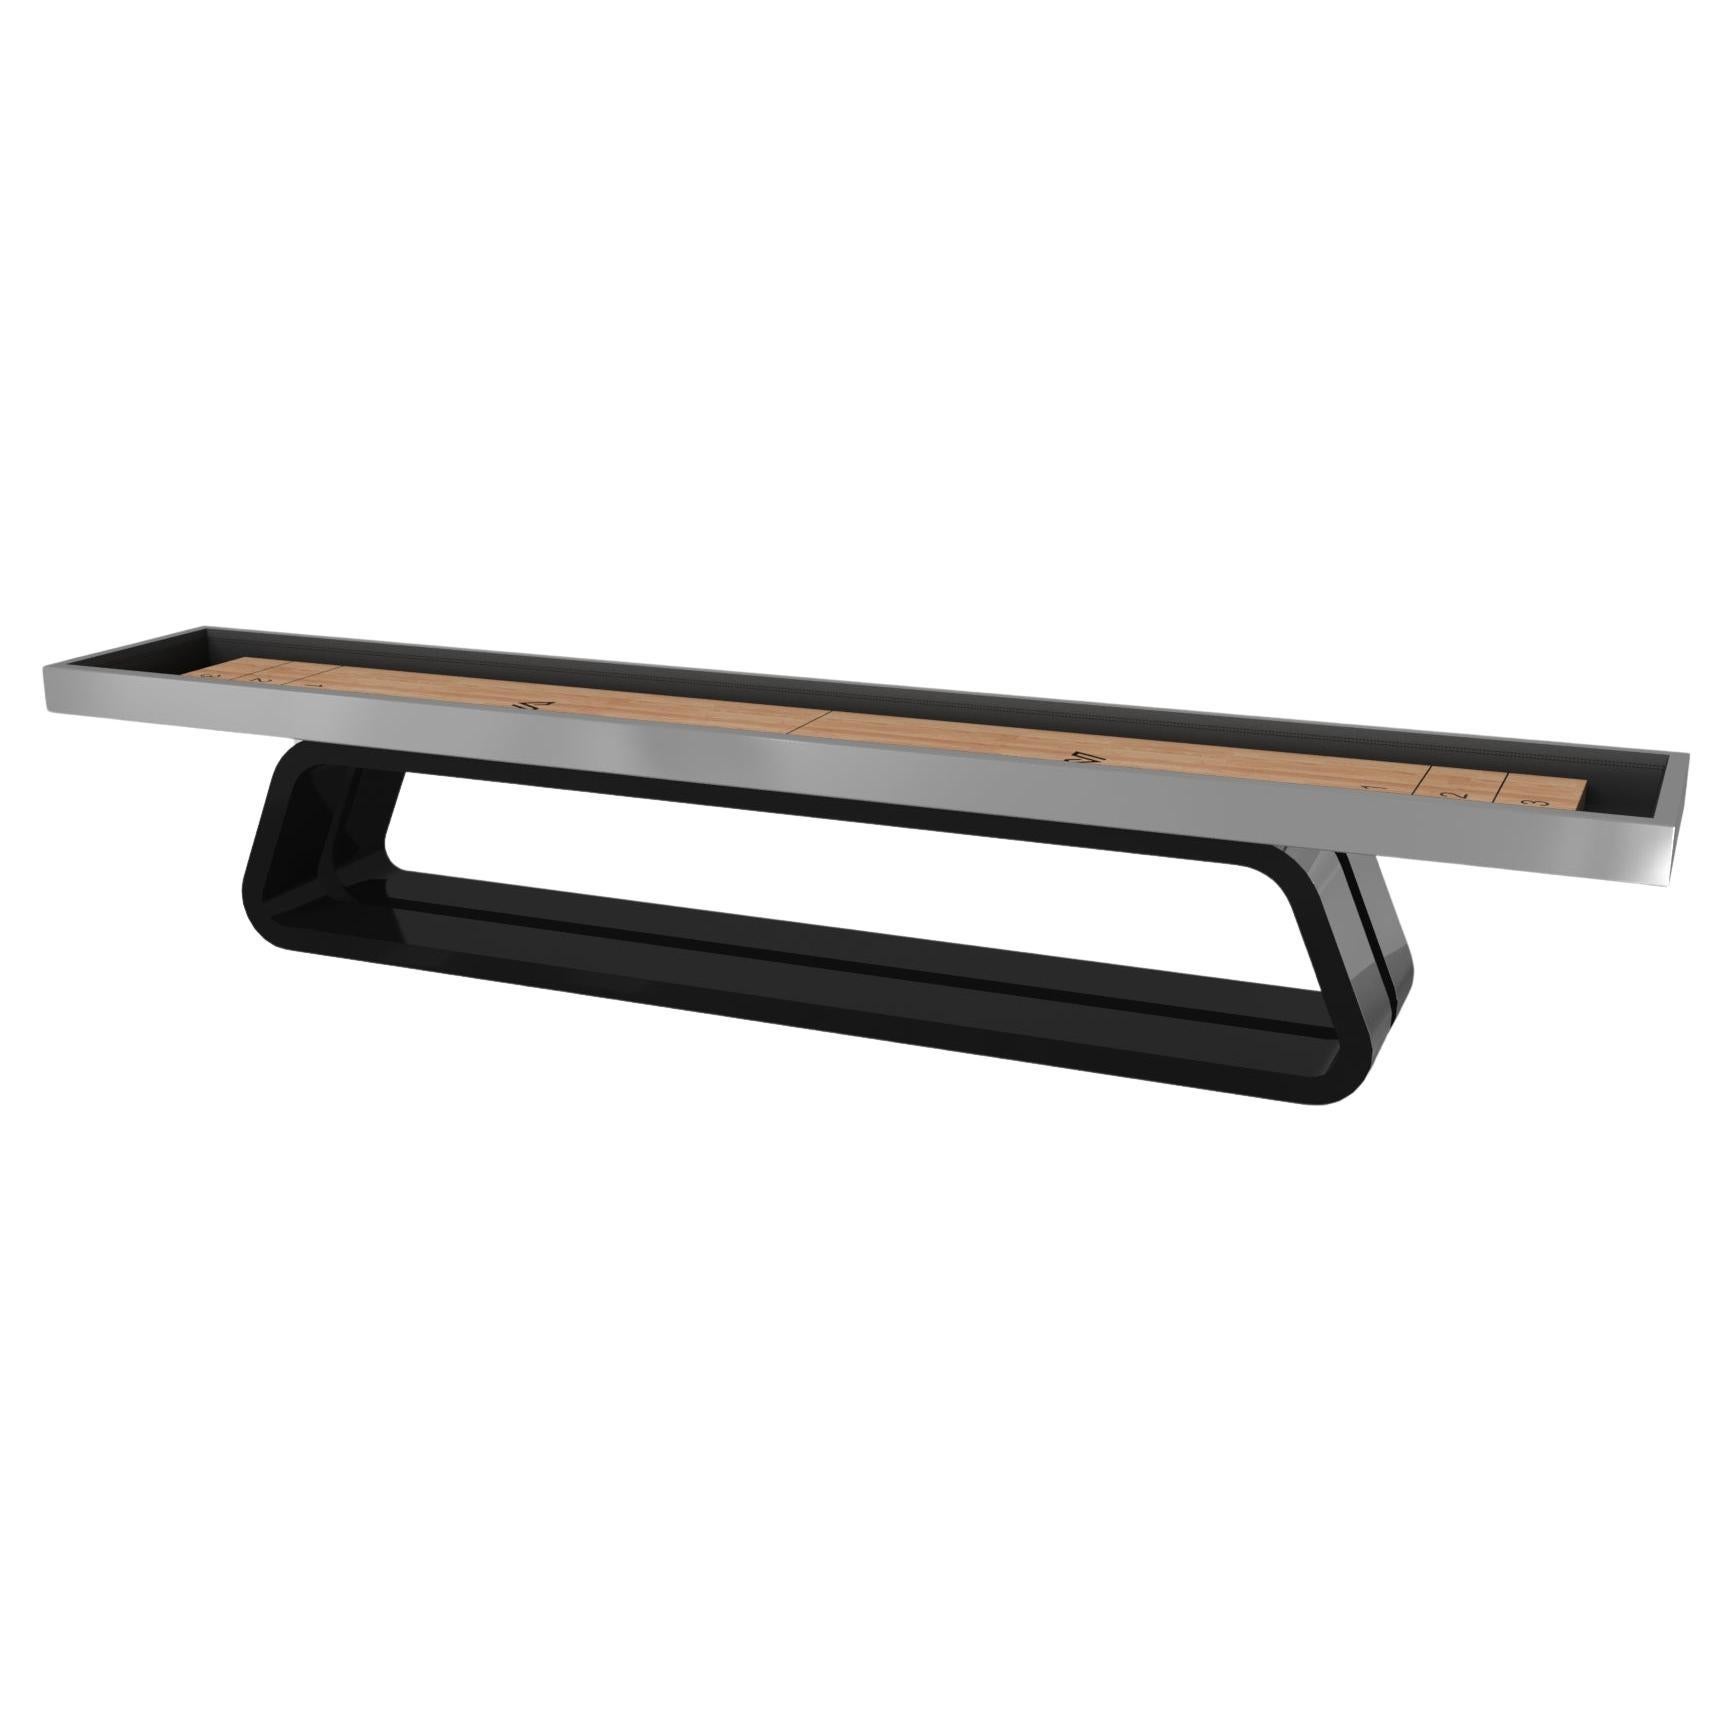 Elevate Customs Luge Shuffleboard Table/Stainless Steel Sheet Metal in 22' - USA